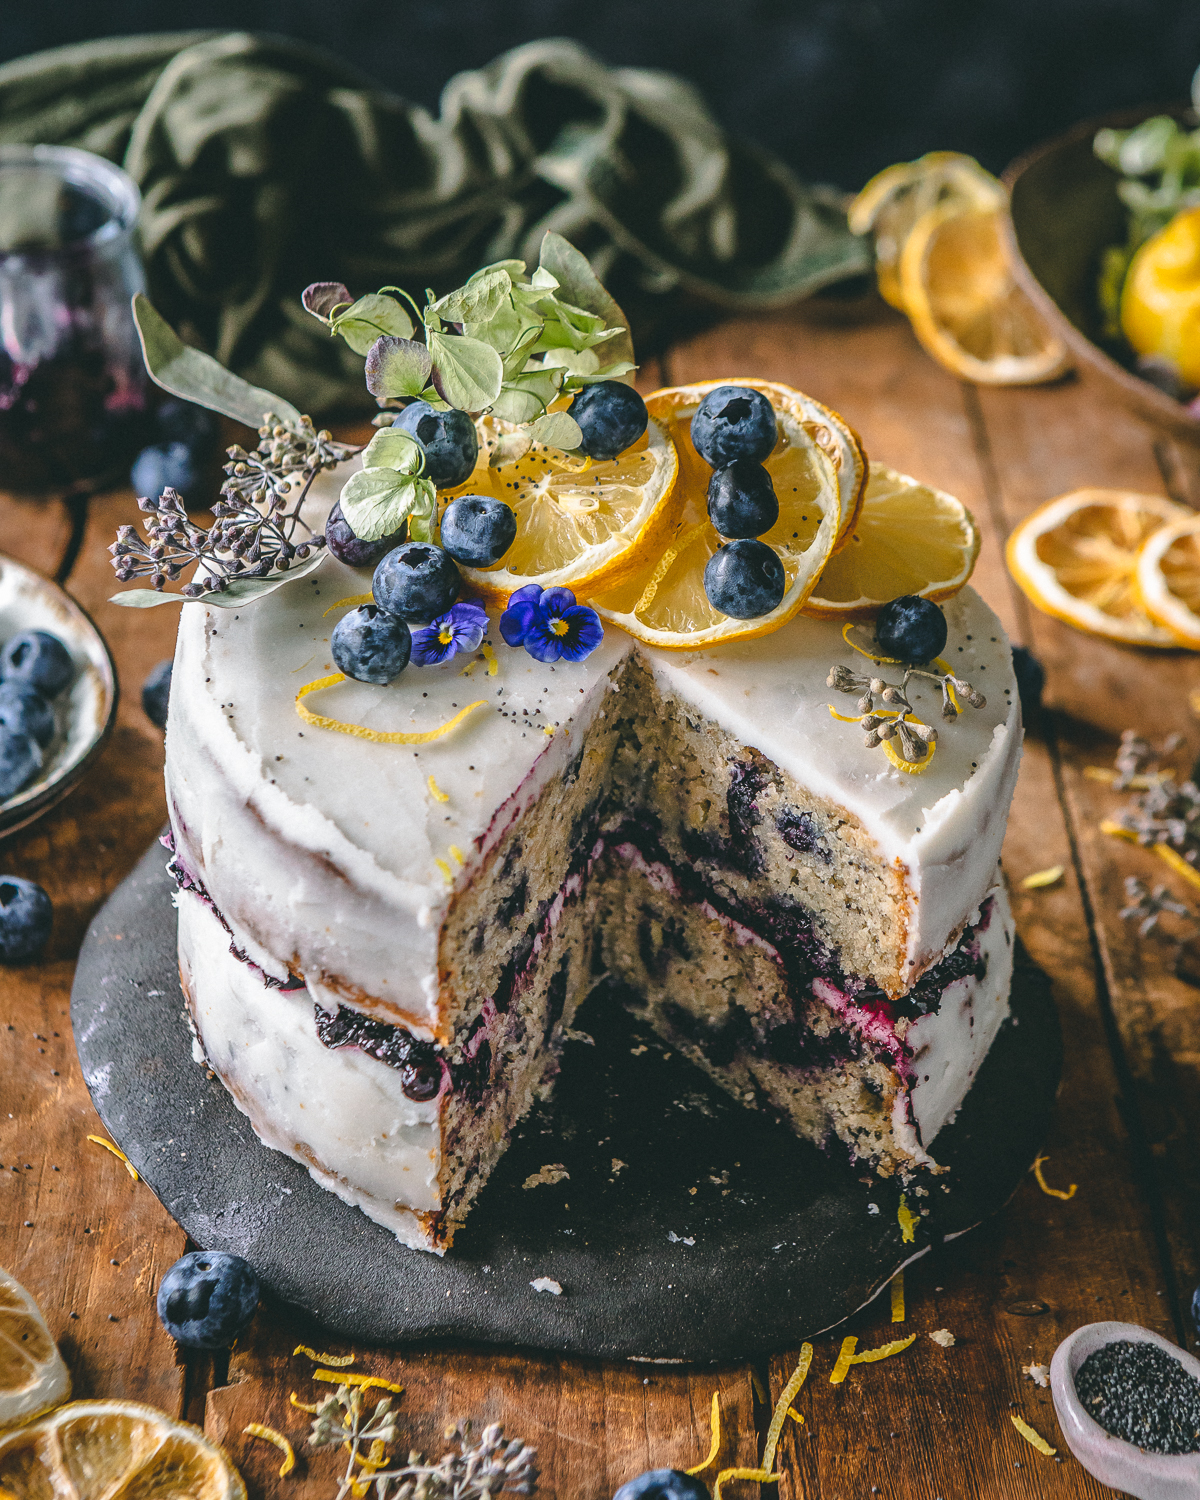 A peek inside the lemon poppyseed gluten free cake with blueberries